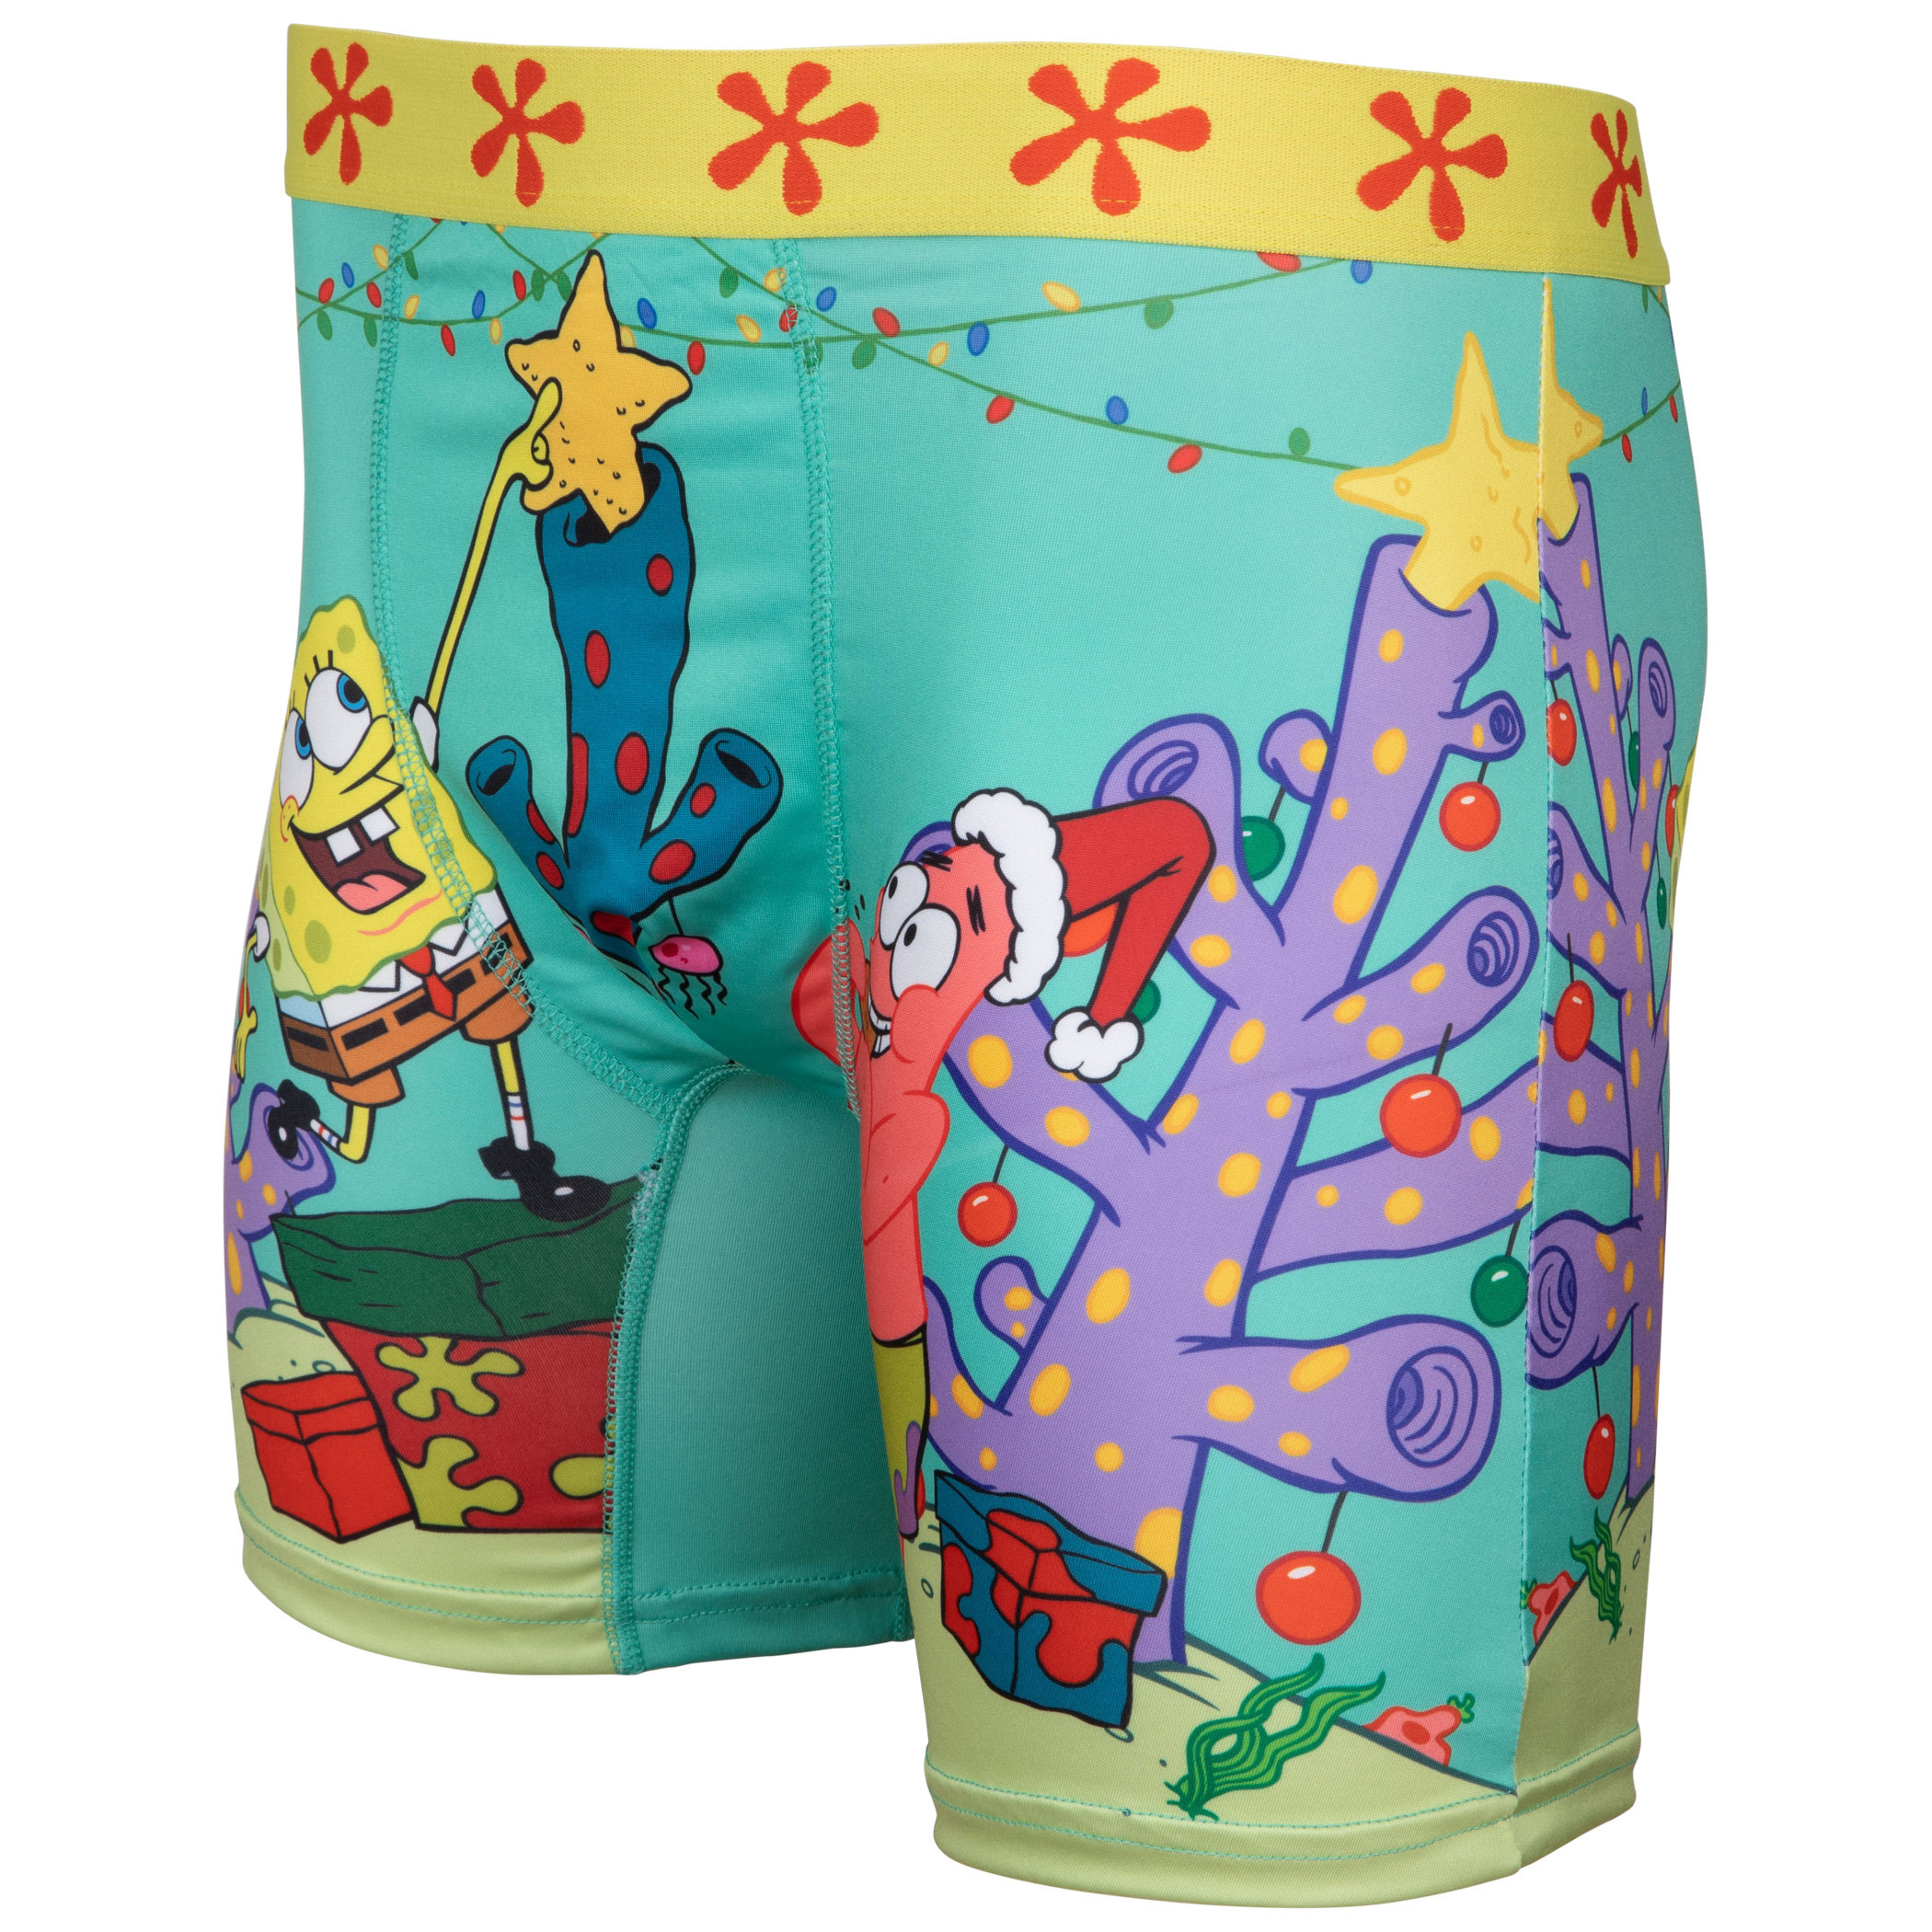 SpongeBob SquarePants Decorating the Holiday Coral Boxer Briefs